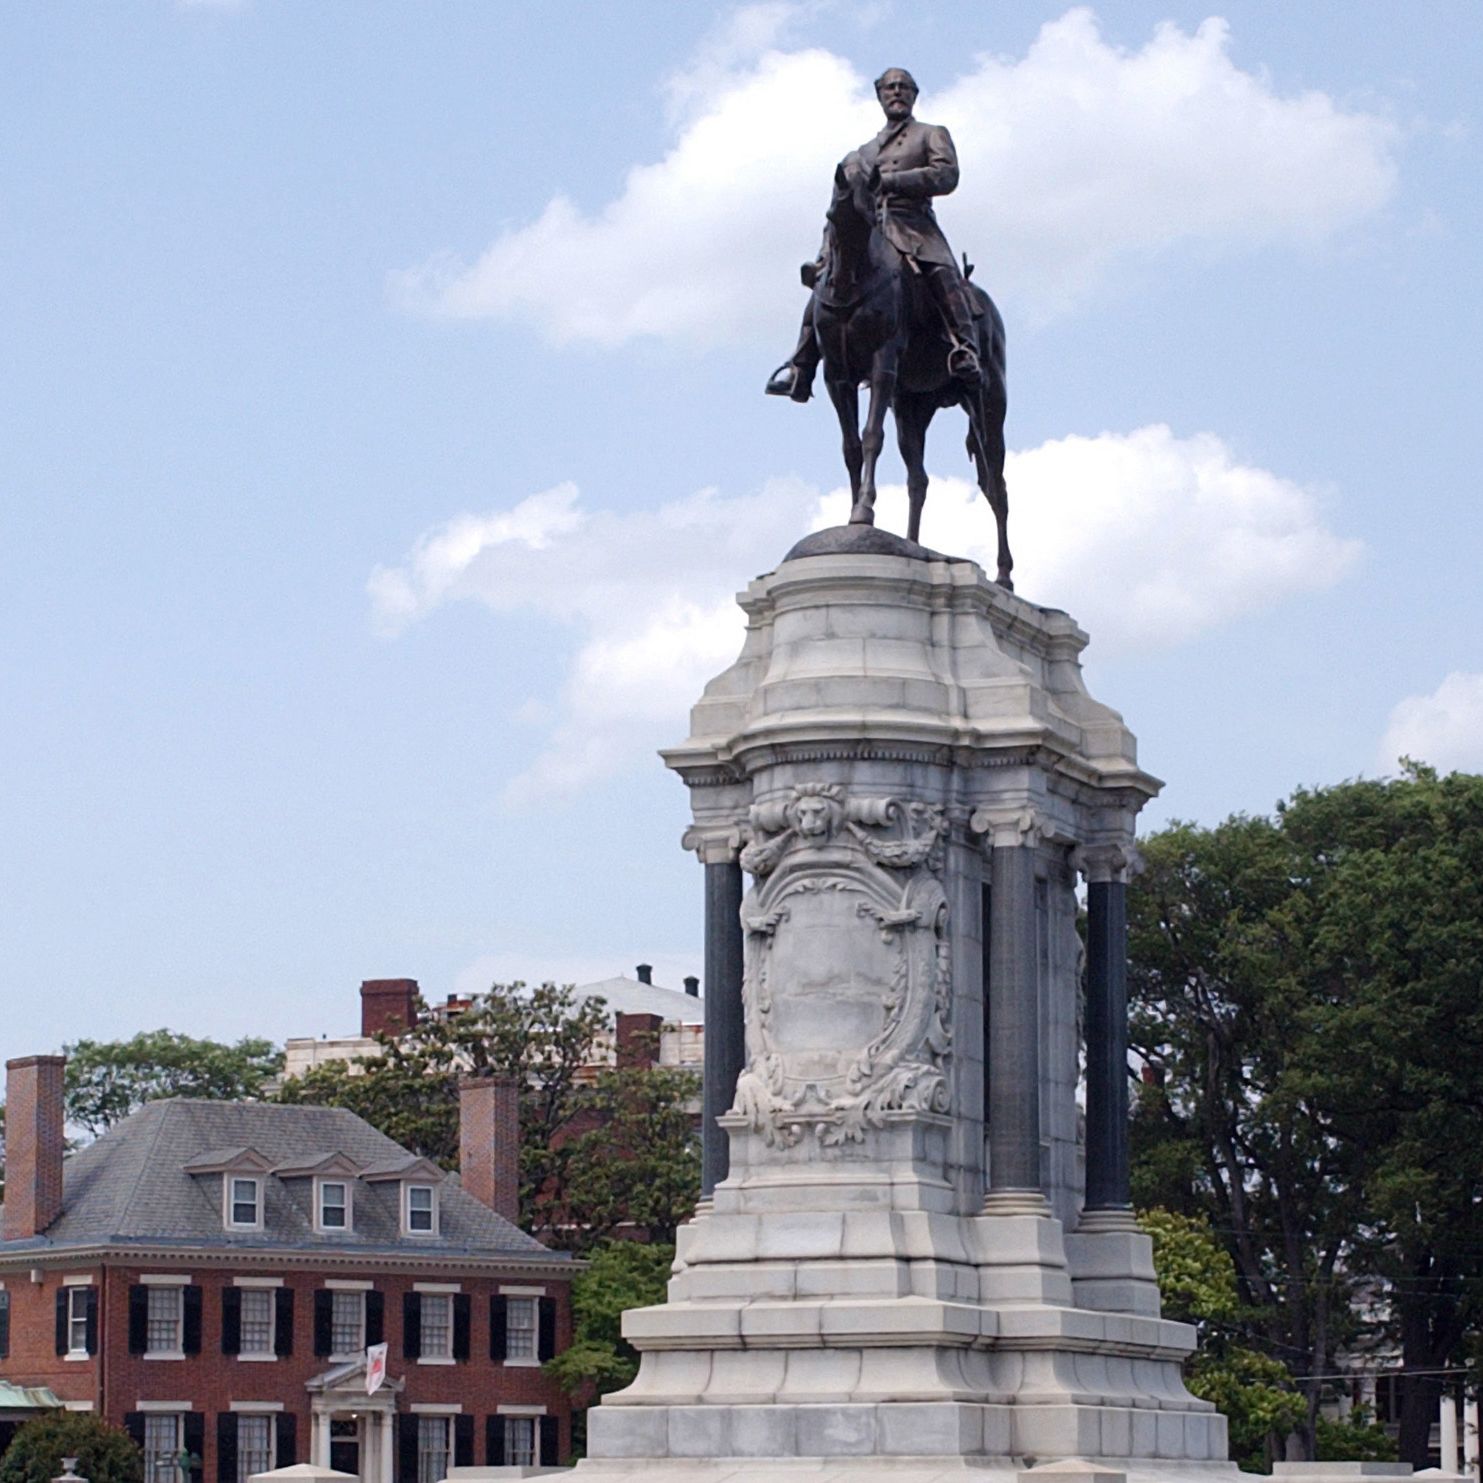 Robert E. Lee was against erecting Confederate memorials | CNN